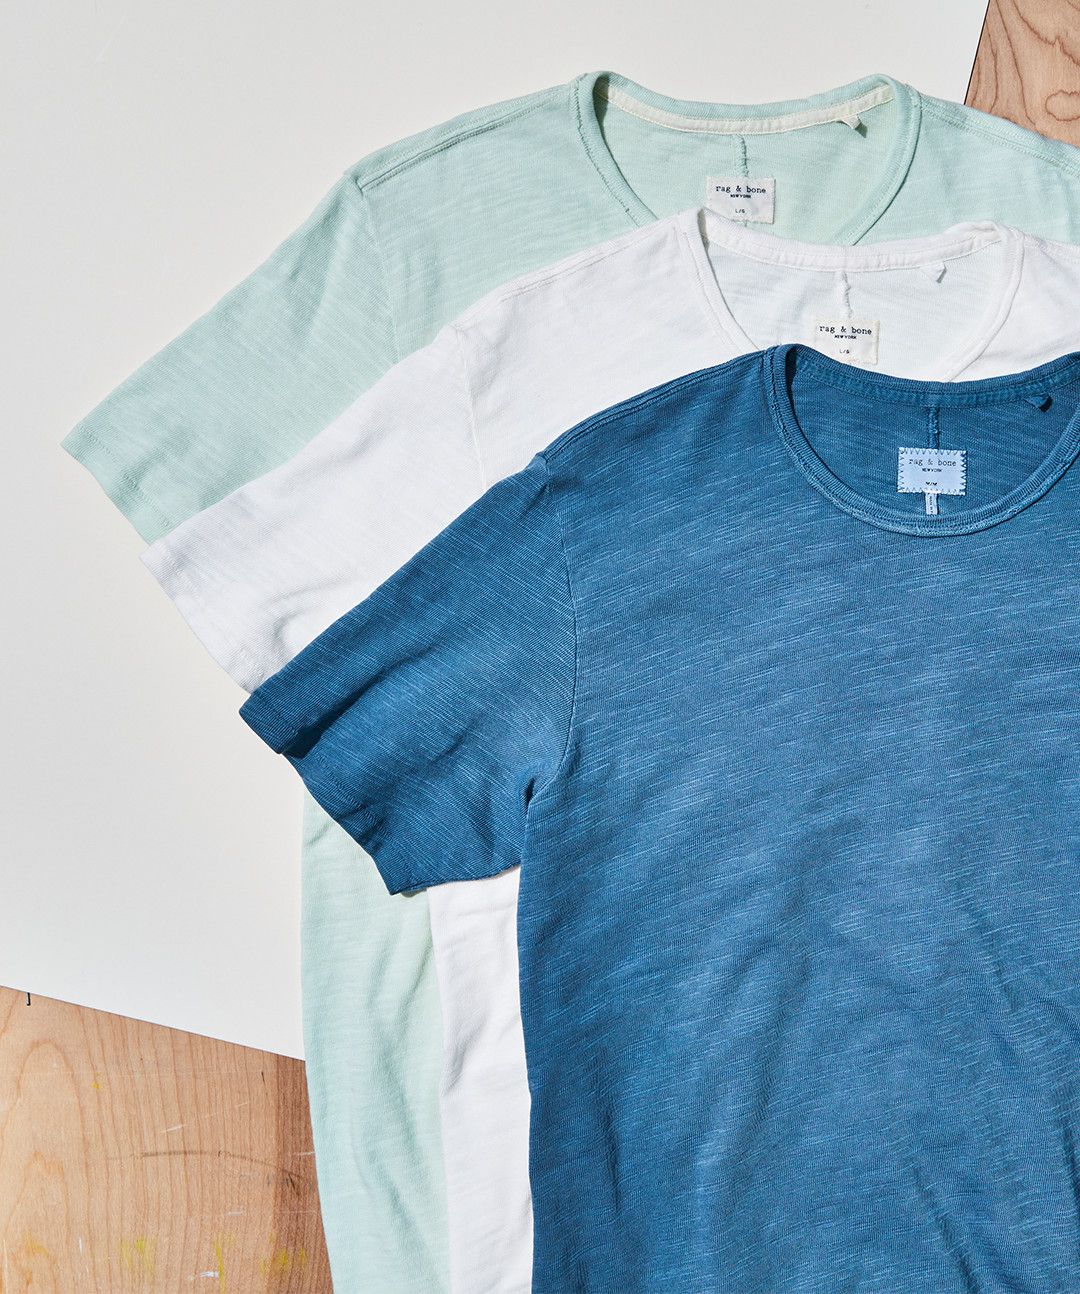 Rag & Bone Classic T-Shirt - Best Stylish Tees for Men